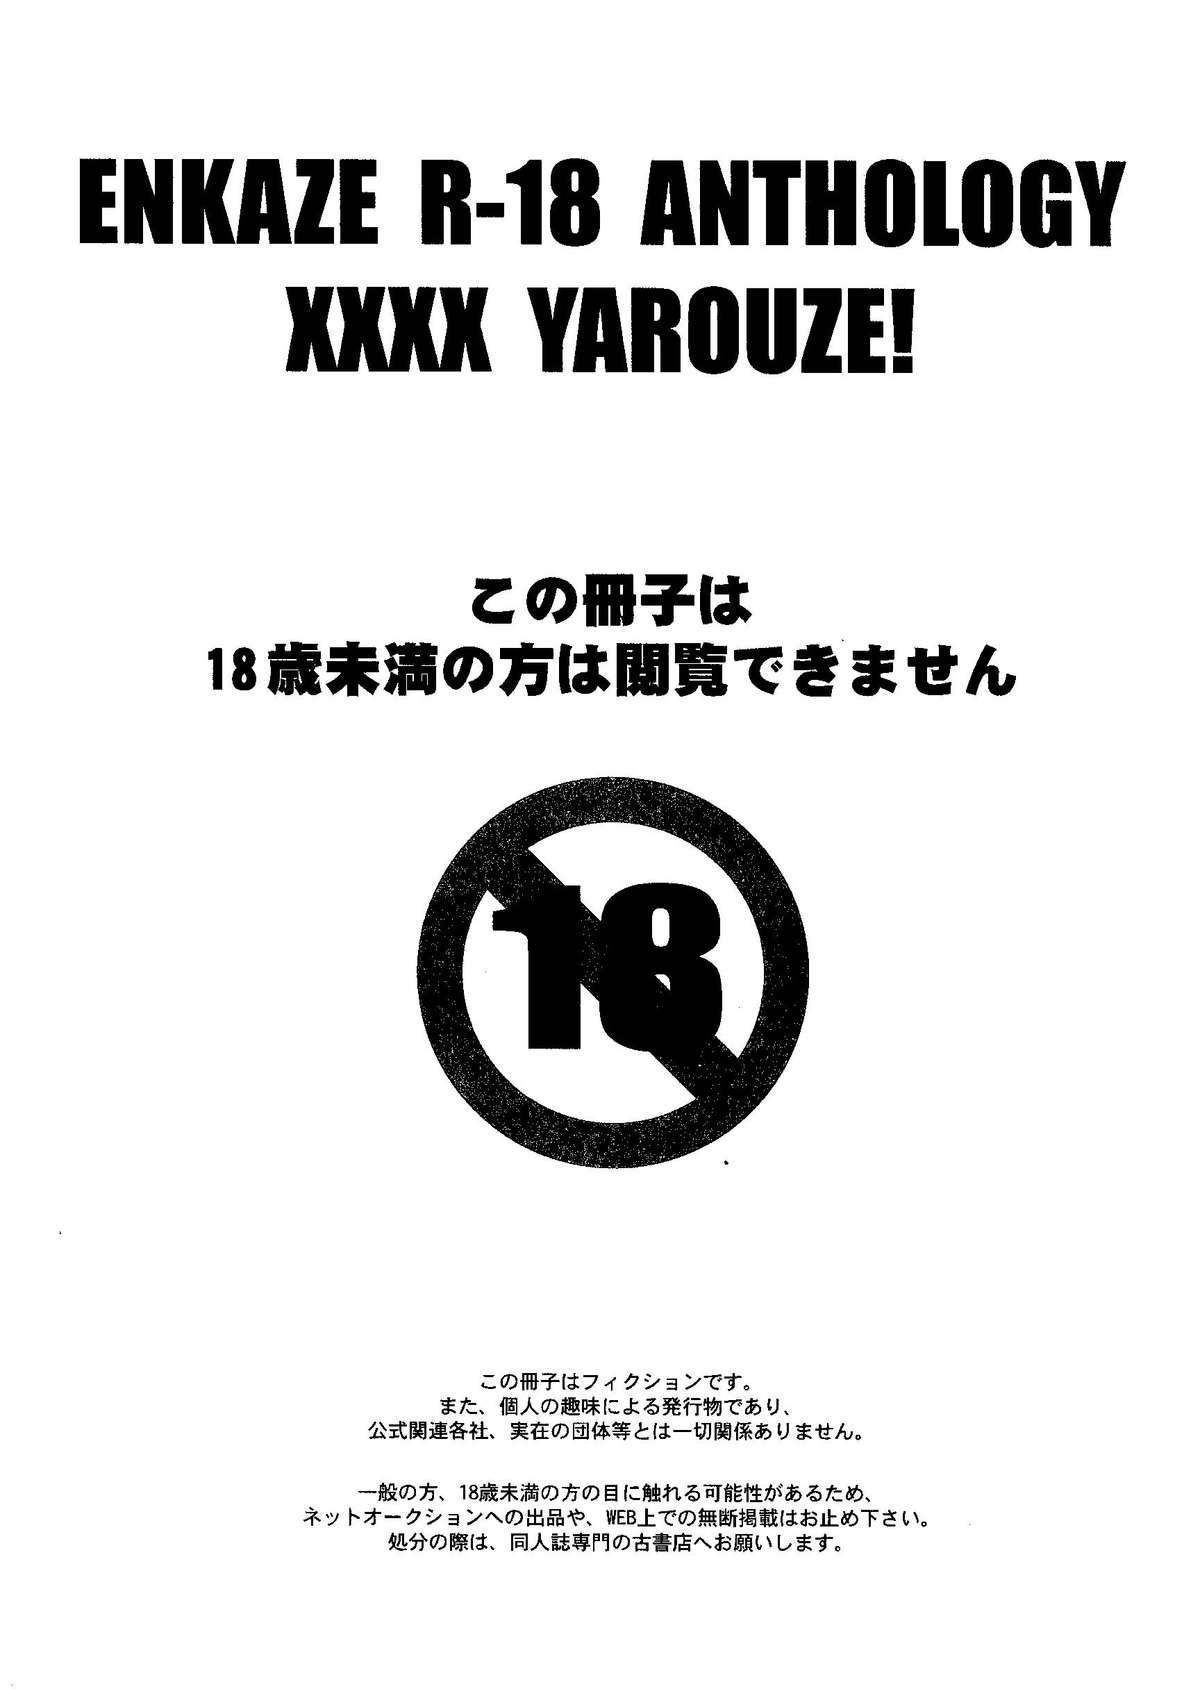 Cock Sucking Kirigakure Takaya (Aniki Otokodou) - ×××× Yarouze! (Inazuma Eleven) - Inazuma eleven Couple Sex - Page 7